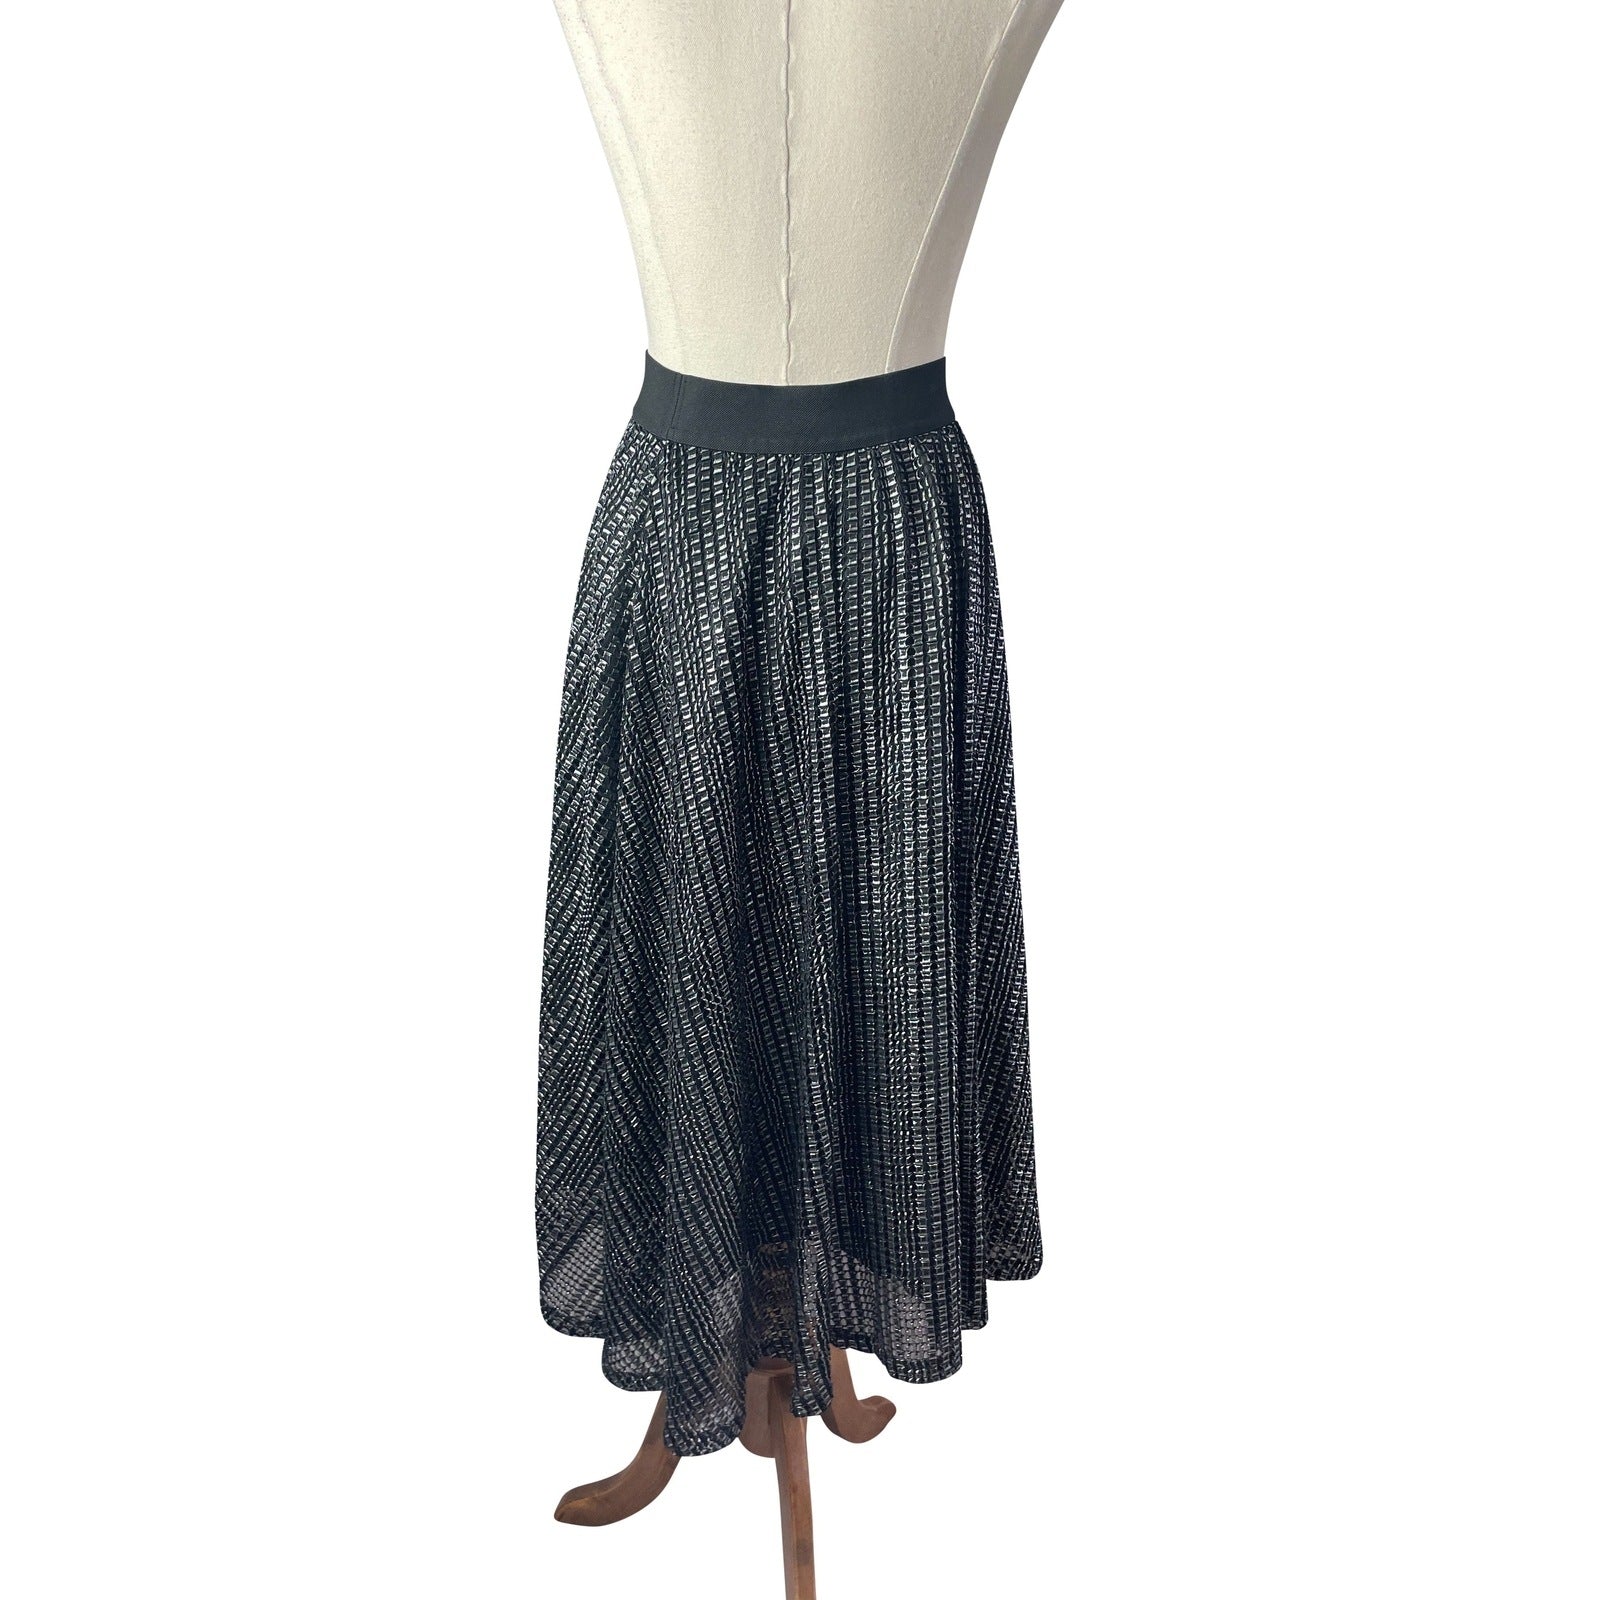 Black w/ silver chain effect midi skirt | size 8-10